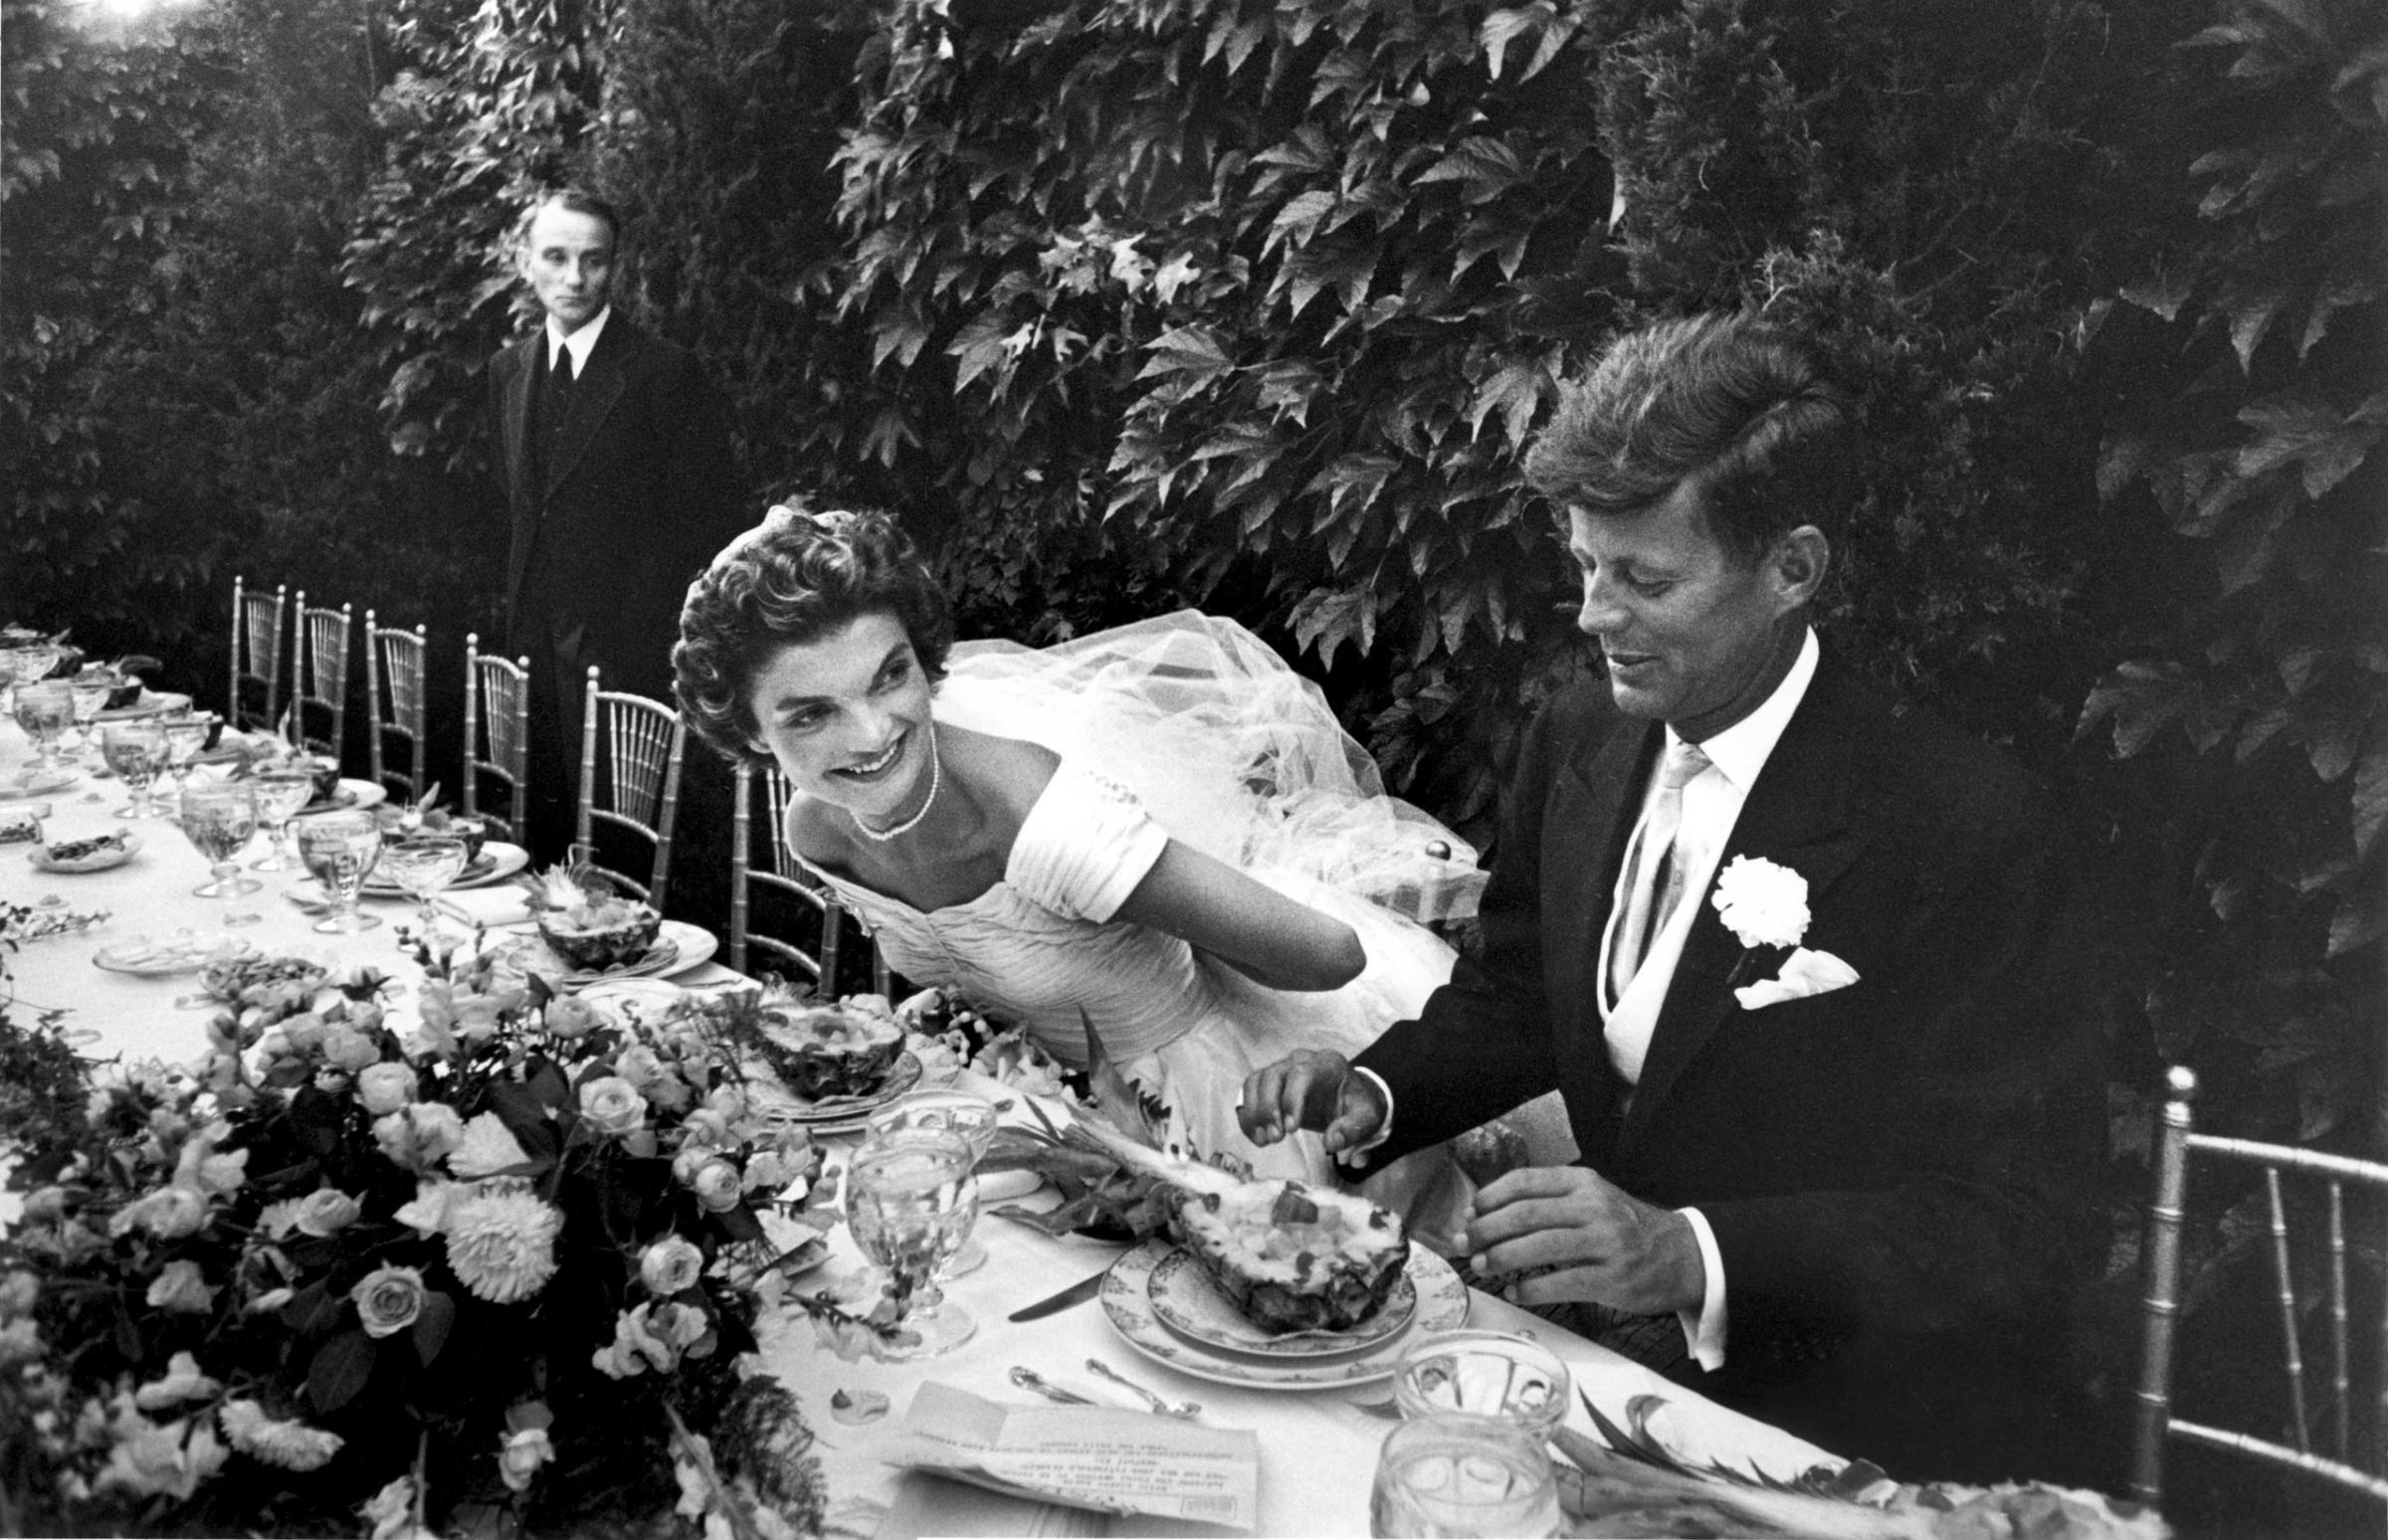 Senator John F. Kennedy and Jacqueline at their wedding reception, Newport, Rhode Island, 1953.